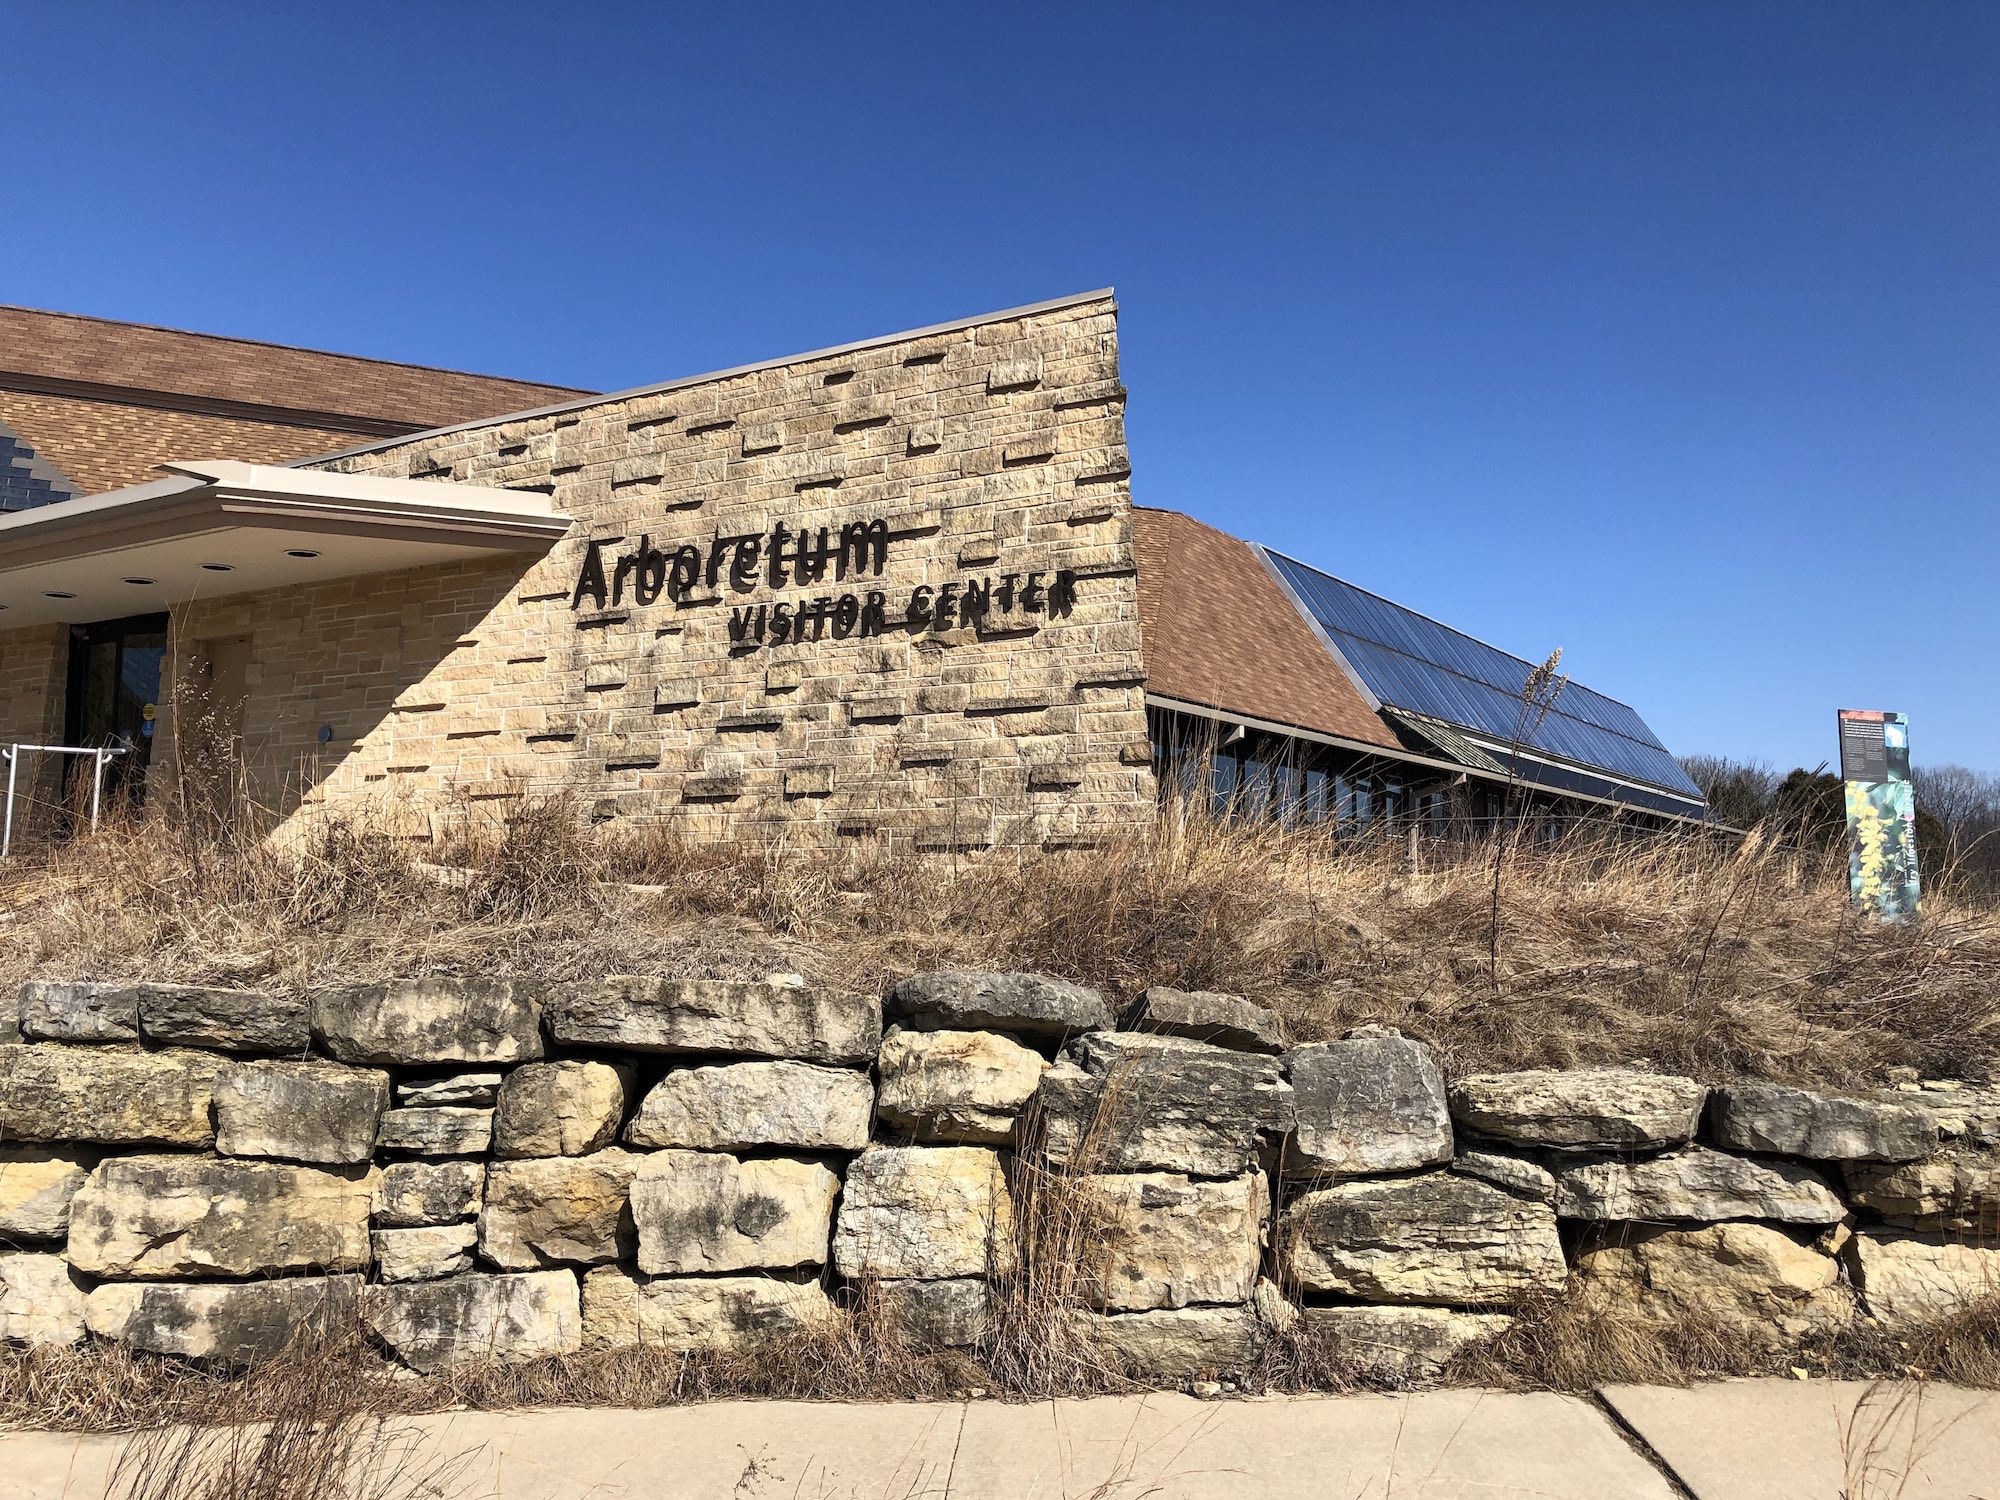 University of Wisconsin Arboretum Visitors Center on March 17, 2019.